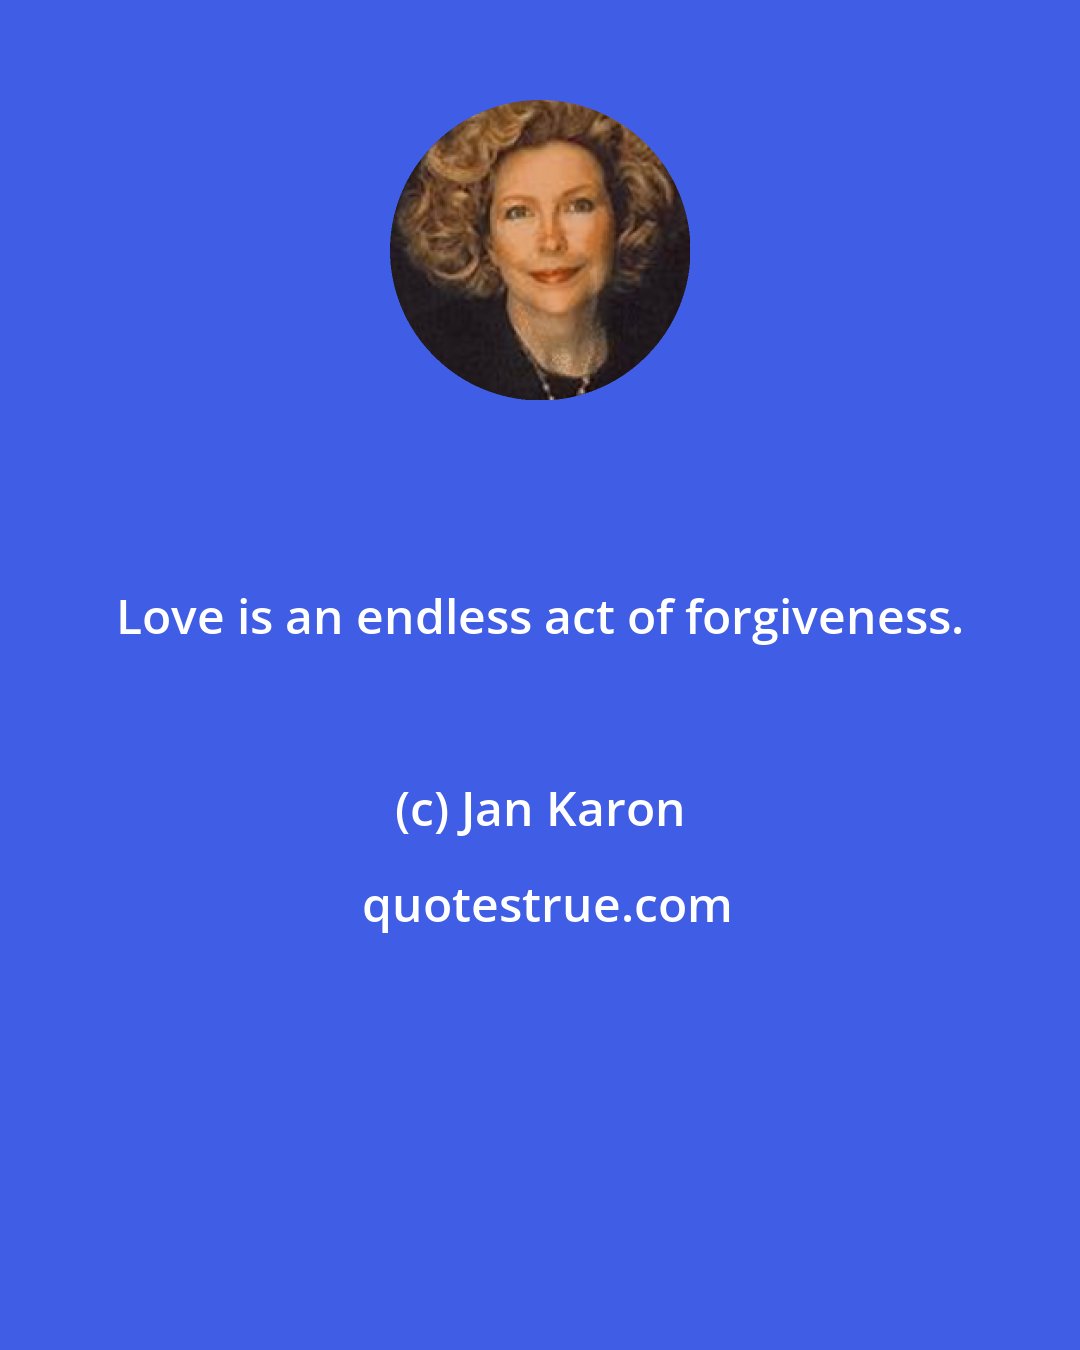 Jan Karon: Love is an endless act of forgiveness.